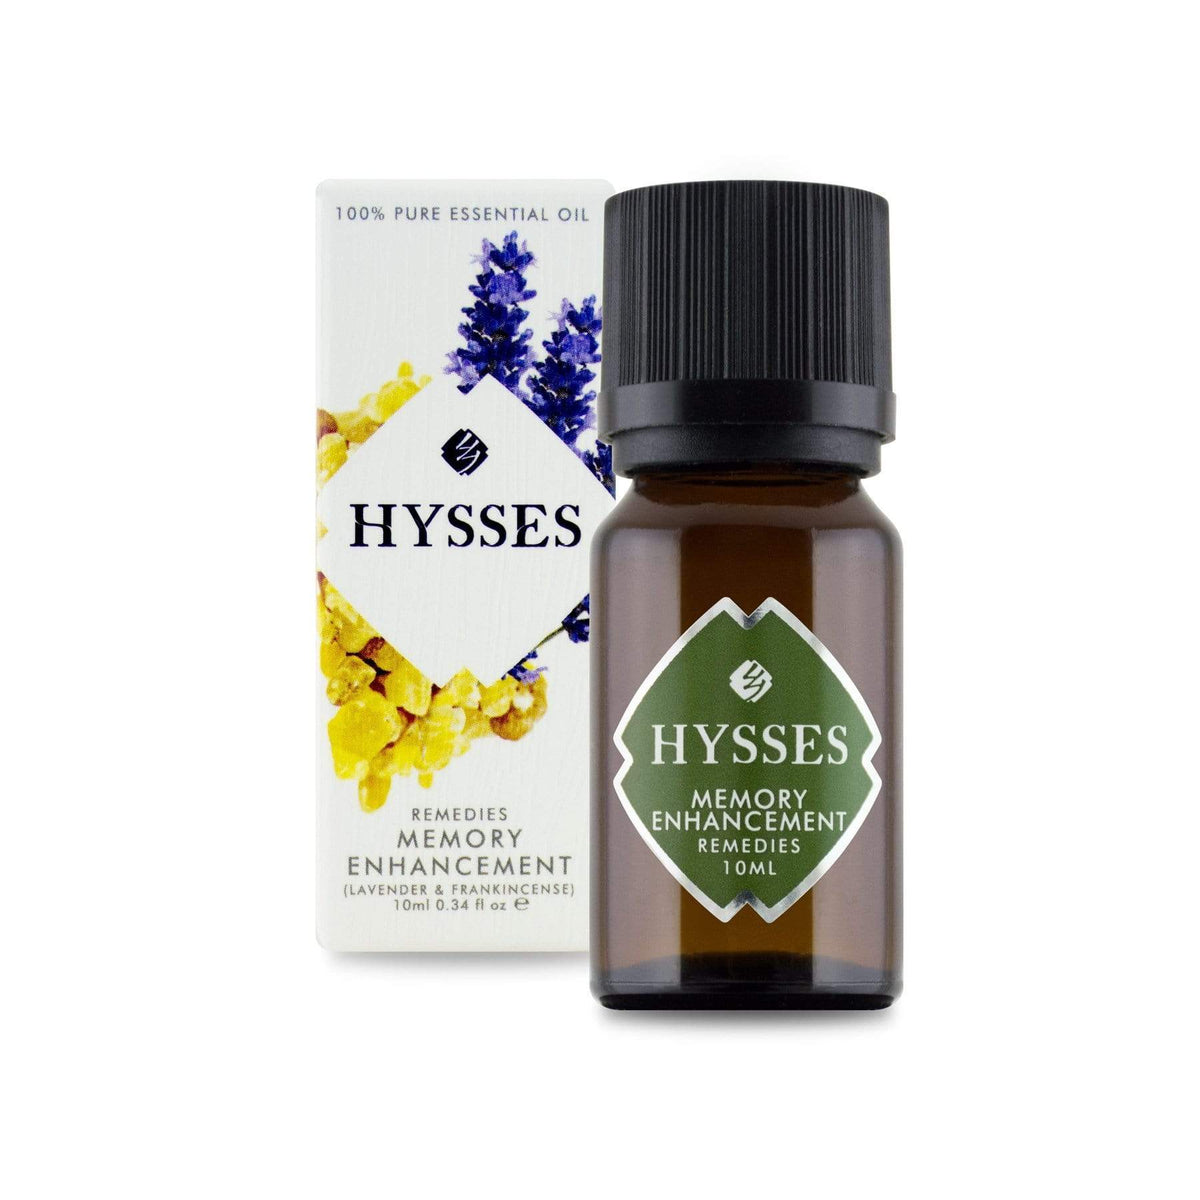 Hysses Essential Oil 10ml Remedies, Memory Enhancement